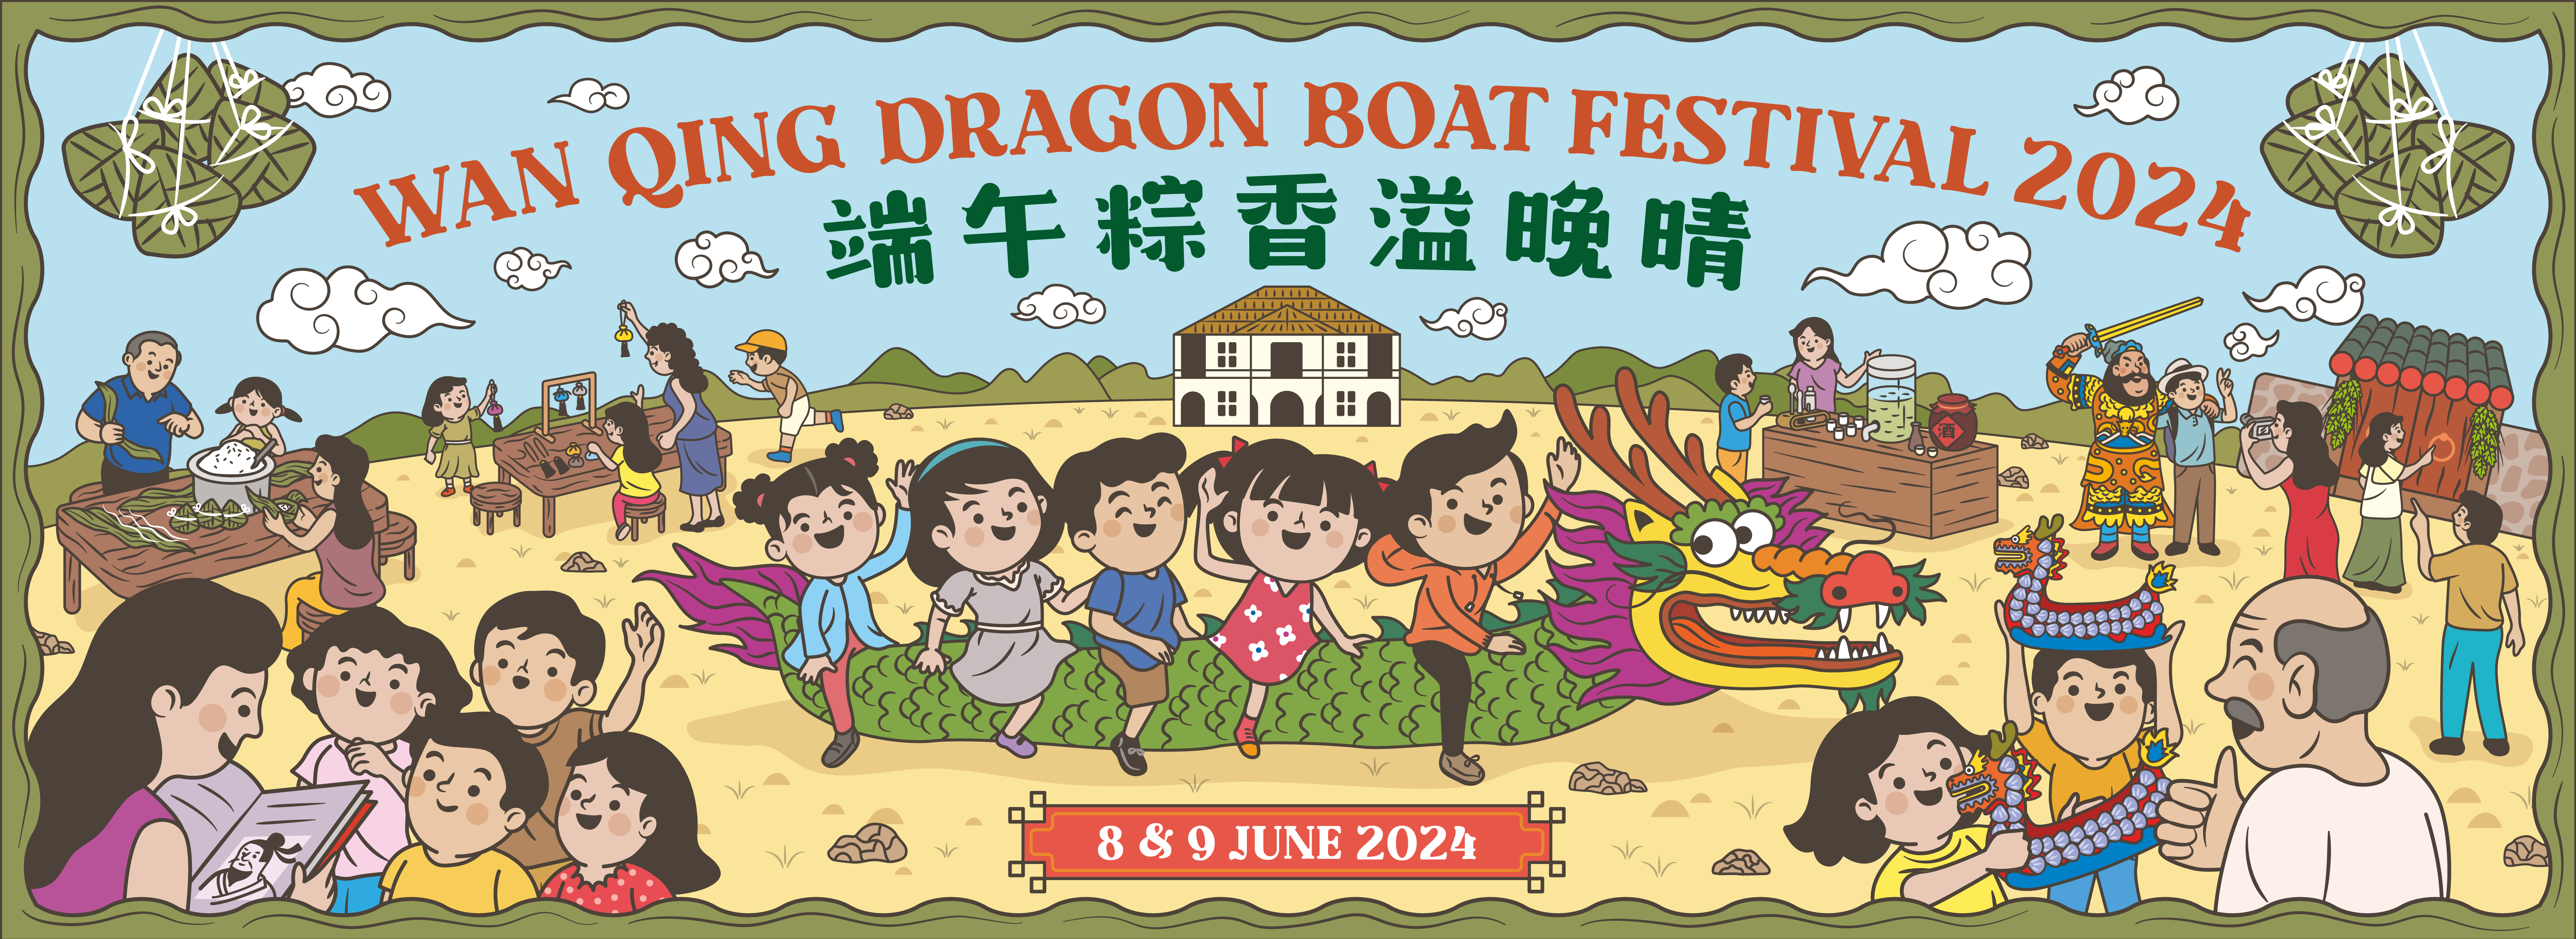 Wan Qing Dragon Boat Festival 2024